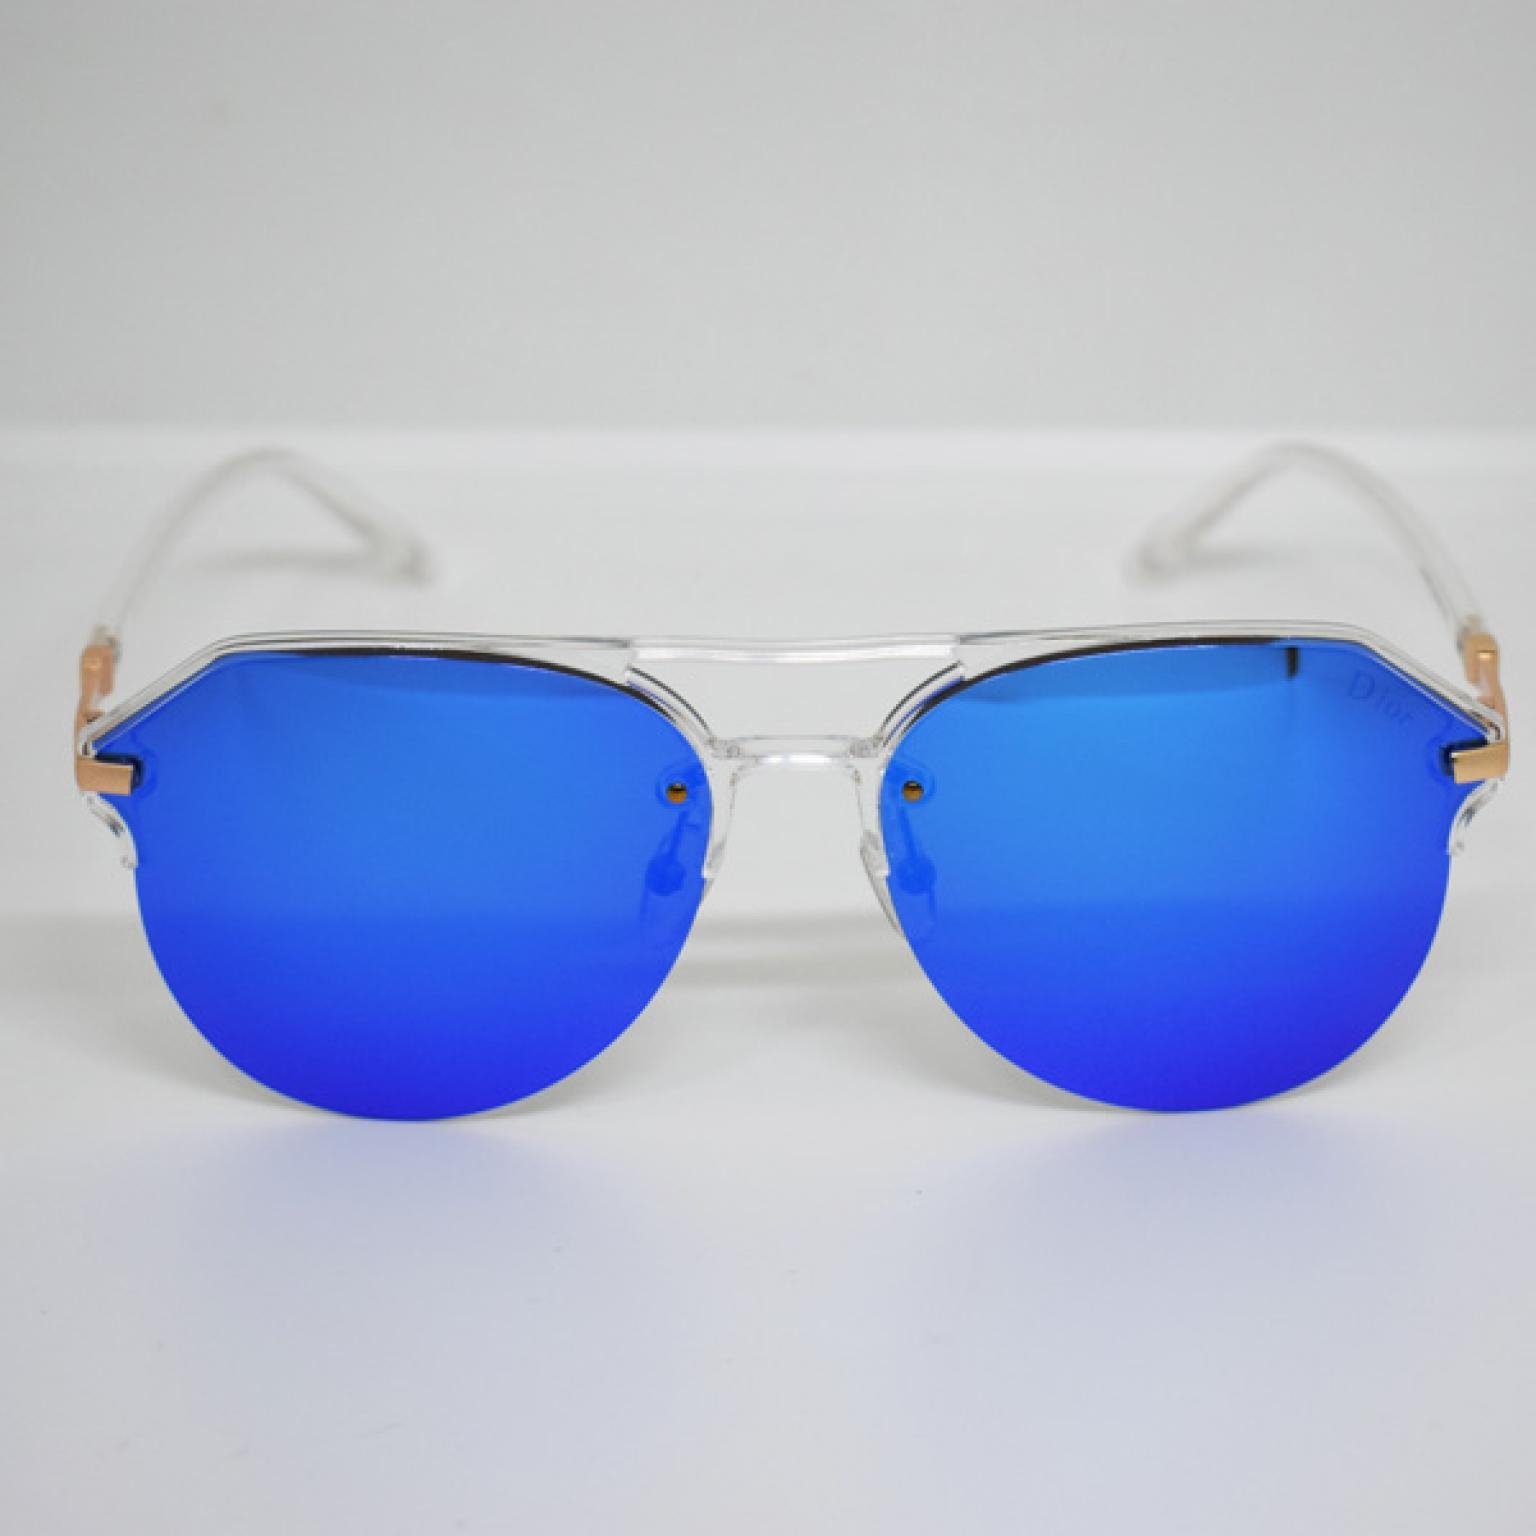 Blue Mercury Trendy Unisex Transparent Body High quality Polarized Side Mirror Sunglass For Men Women UV400 |CBL-110| 